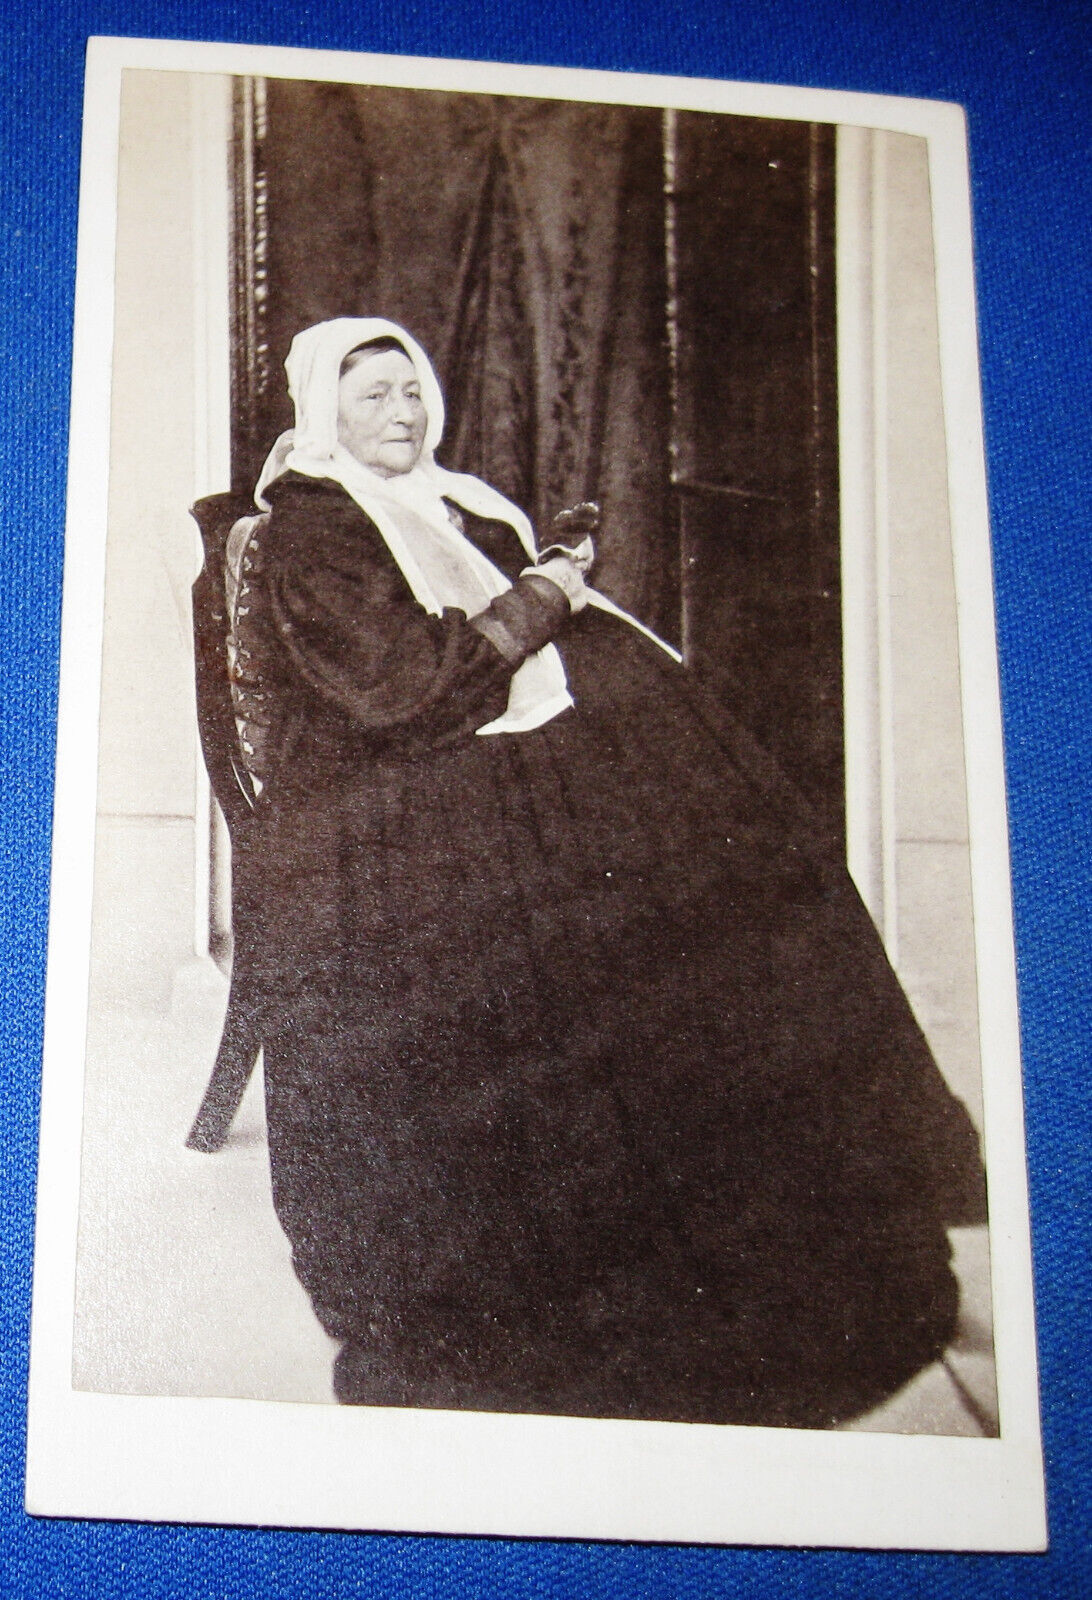 CDV PHOTO OF A SEATED MATRONLY WOMAN WEARING A HOOP DRESS & BONNET NORWICH UK